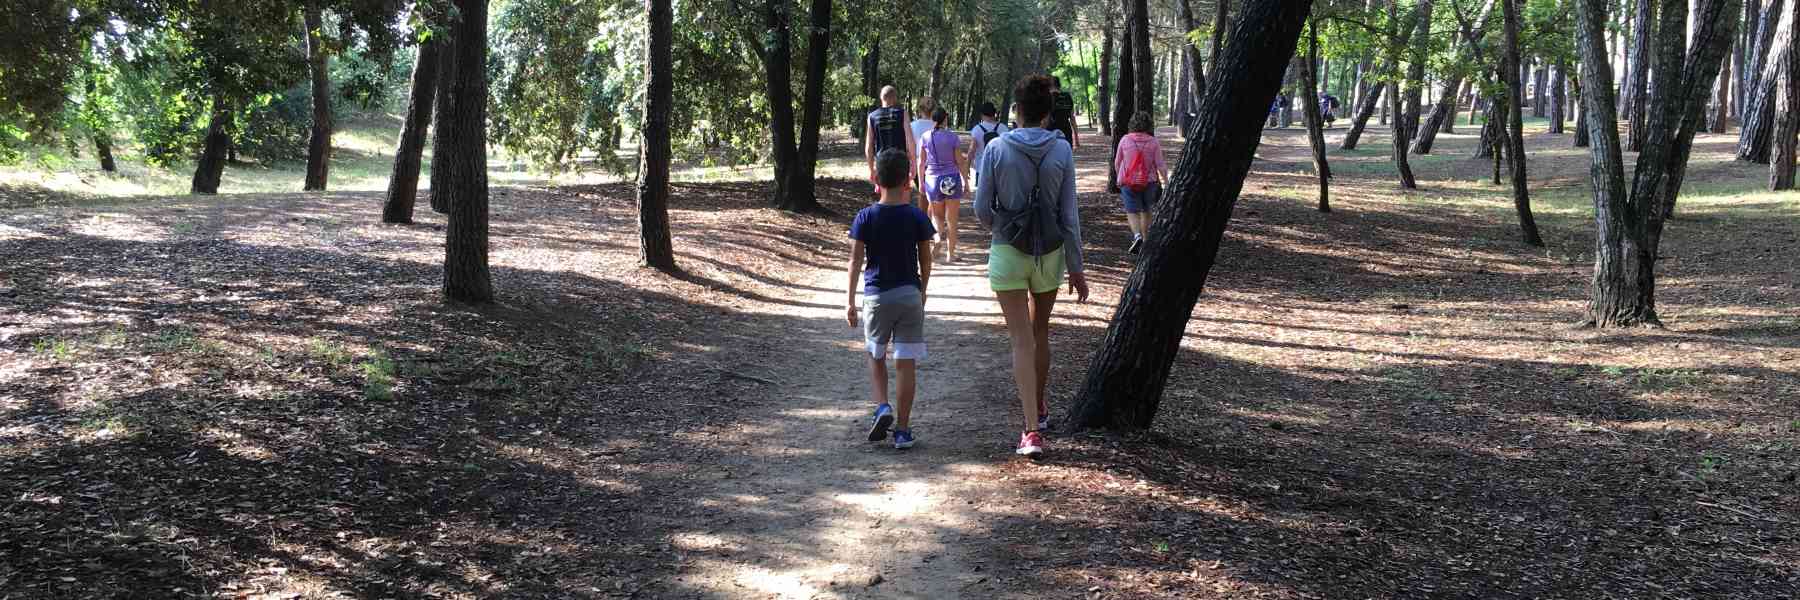 Riviera dei Pini Wellness - Yoga lessons in the pinewood